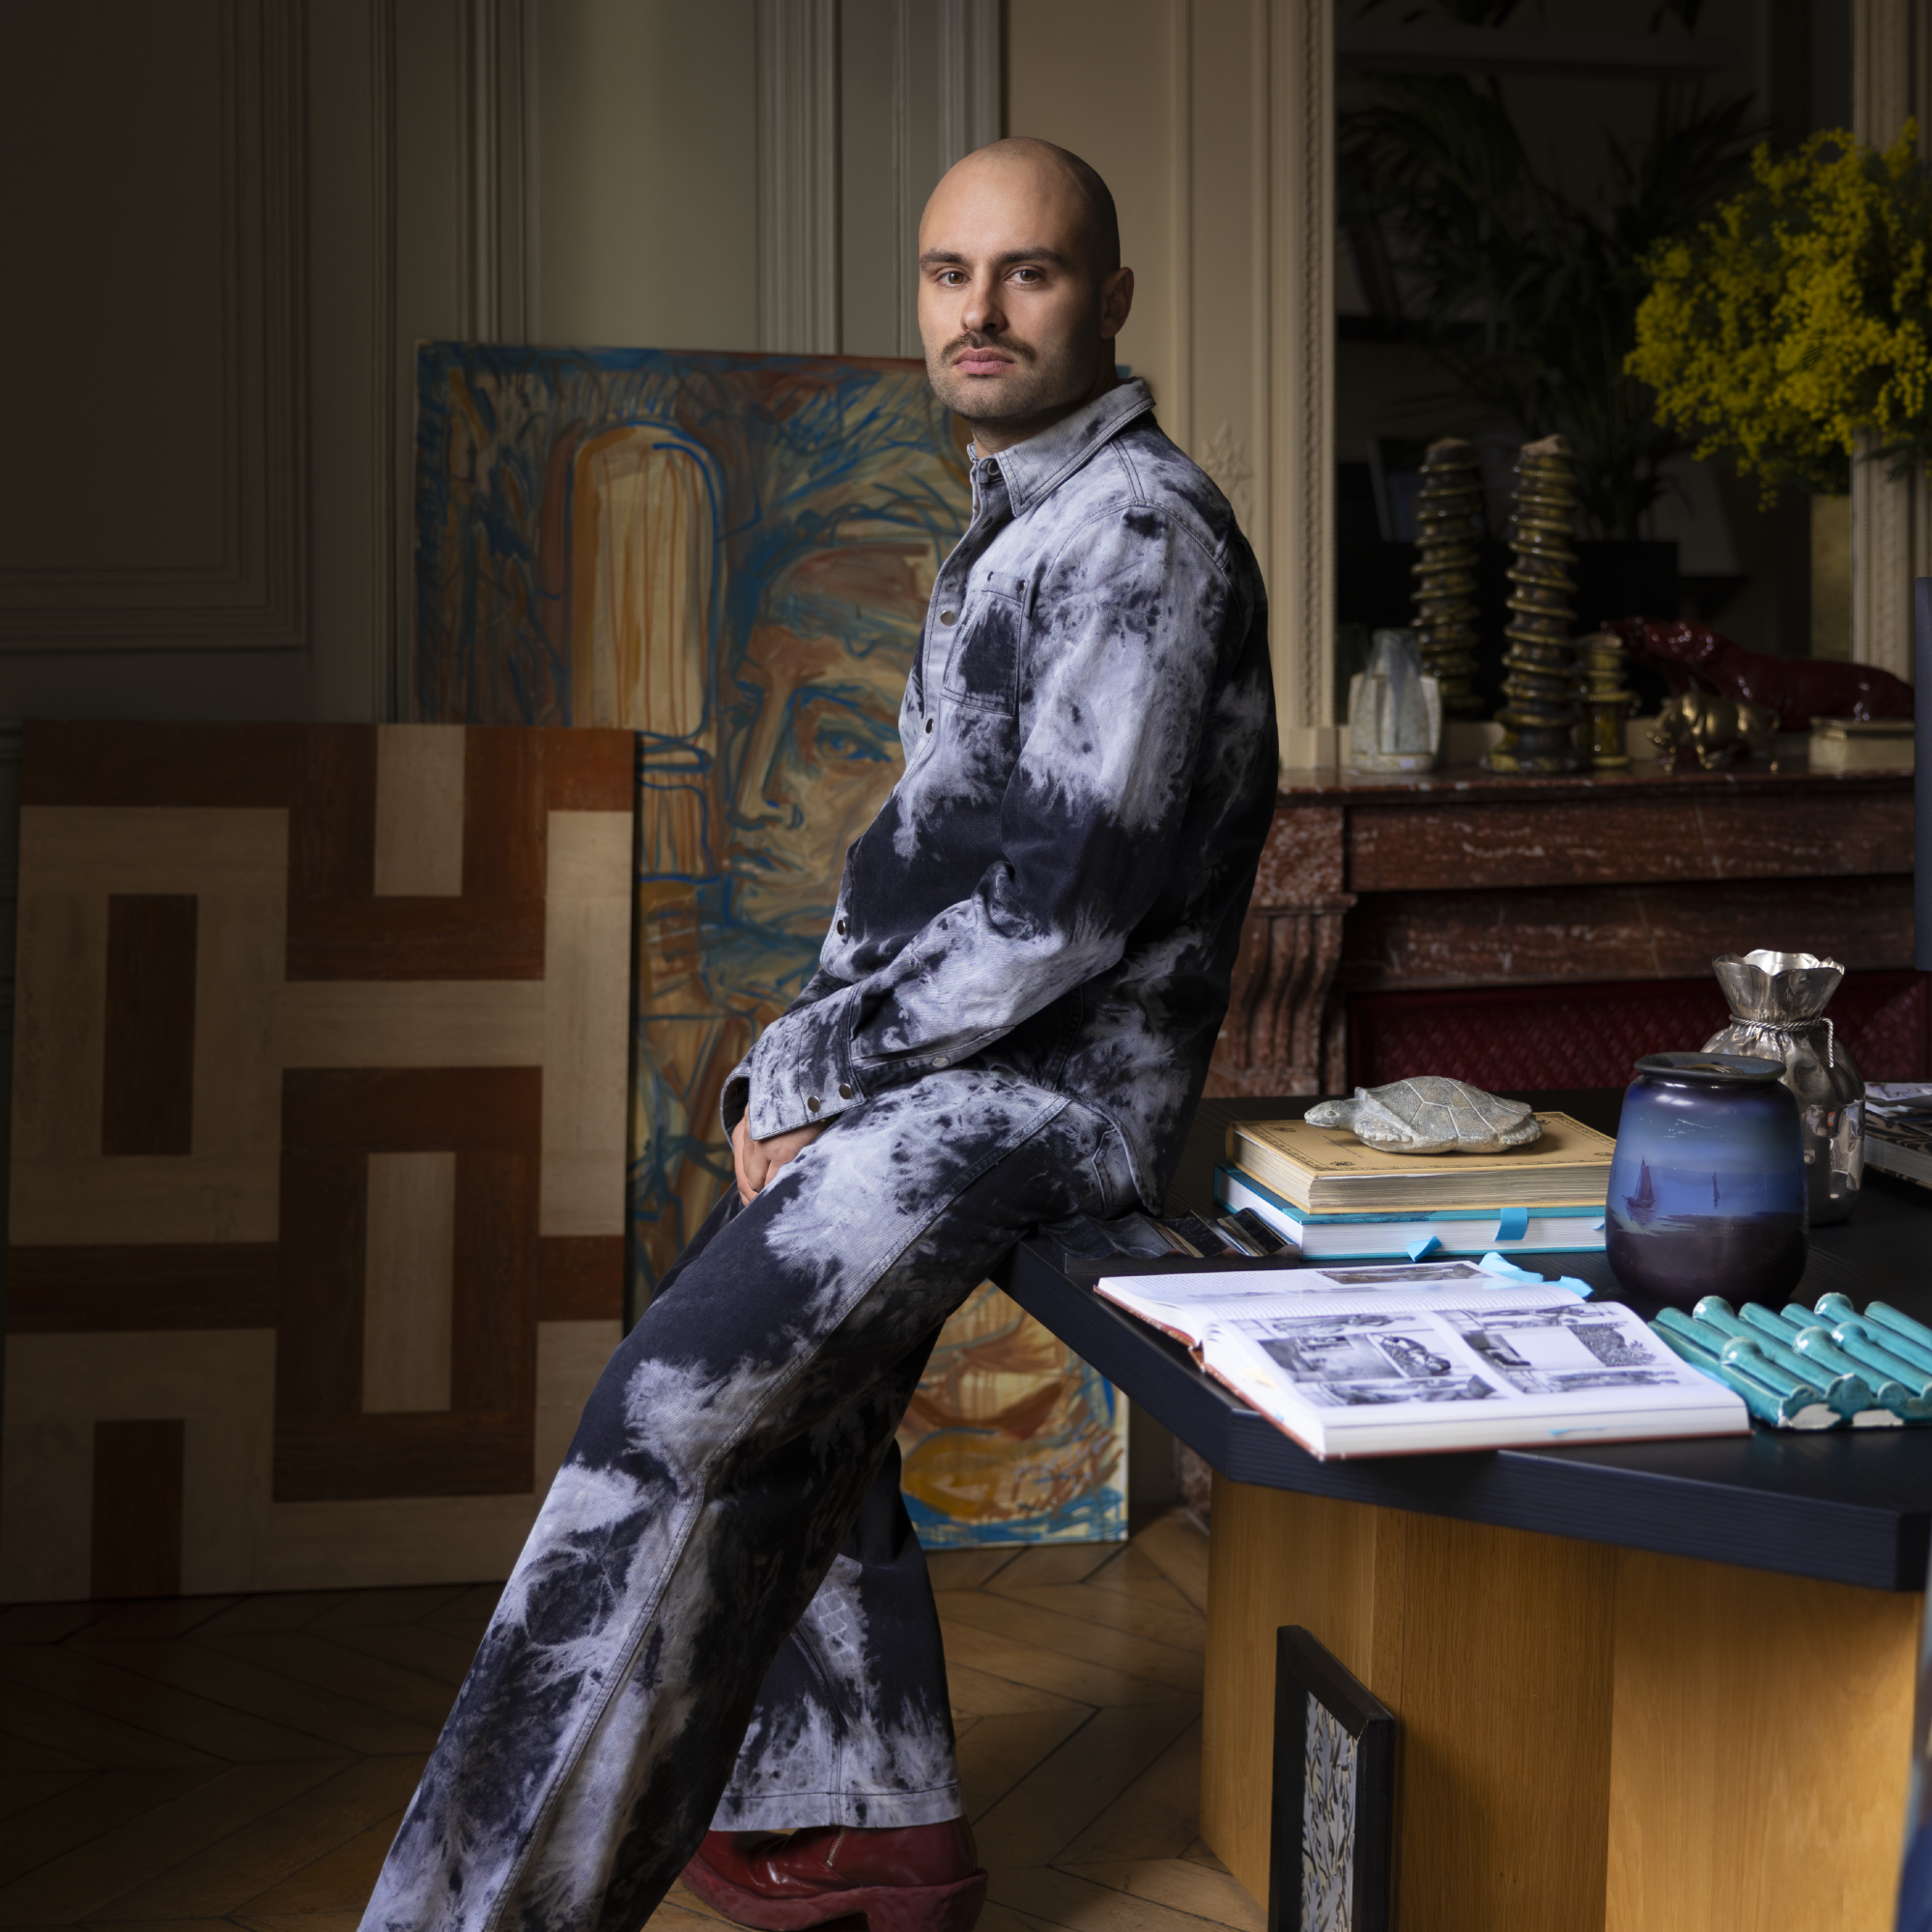 Hugo Toro designer profile image in office wearing purple suit